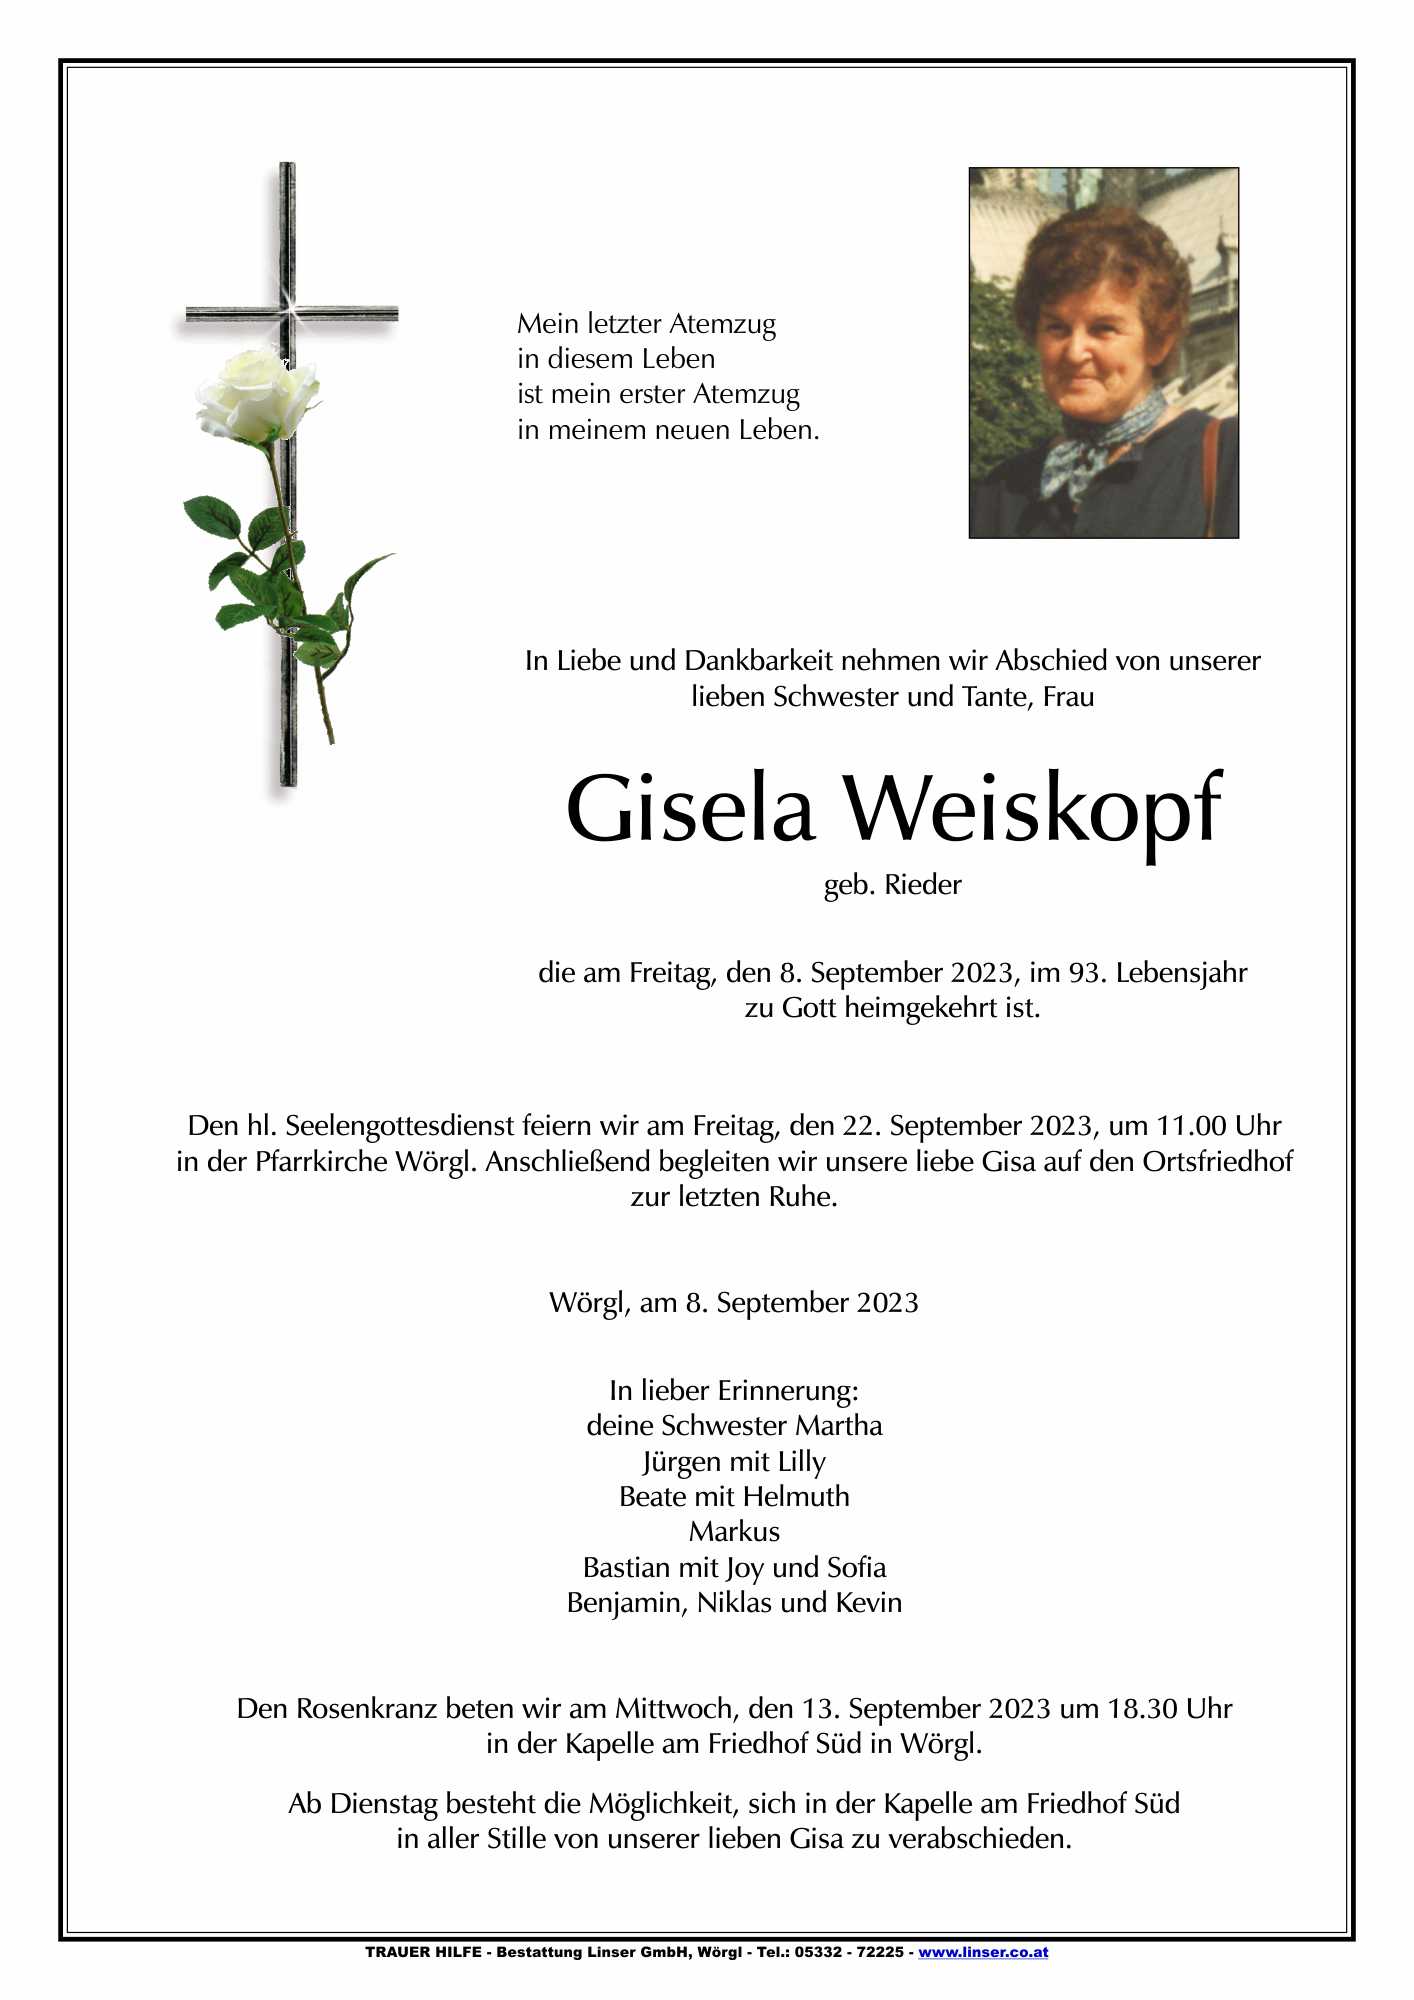 Gisela Weiskopf